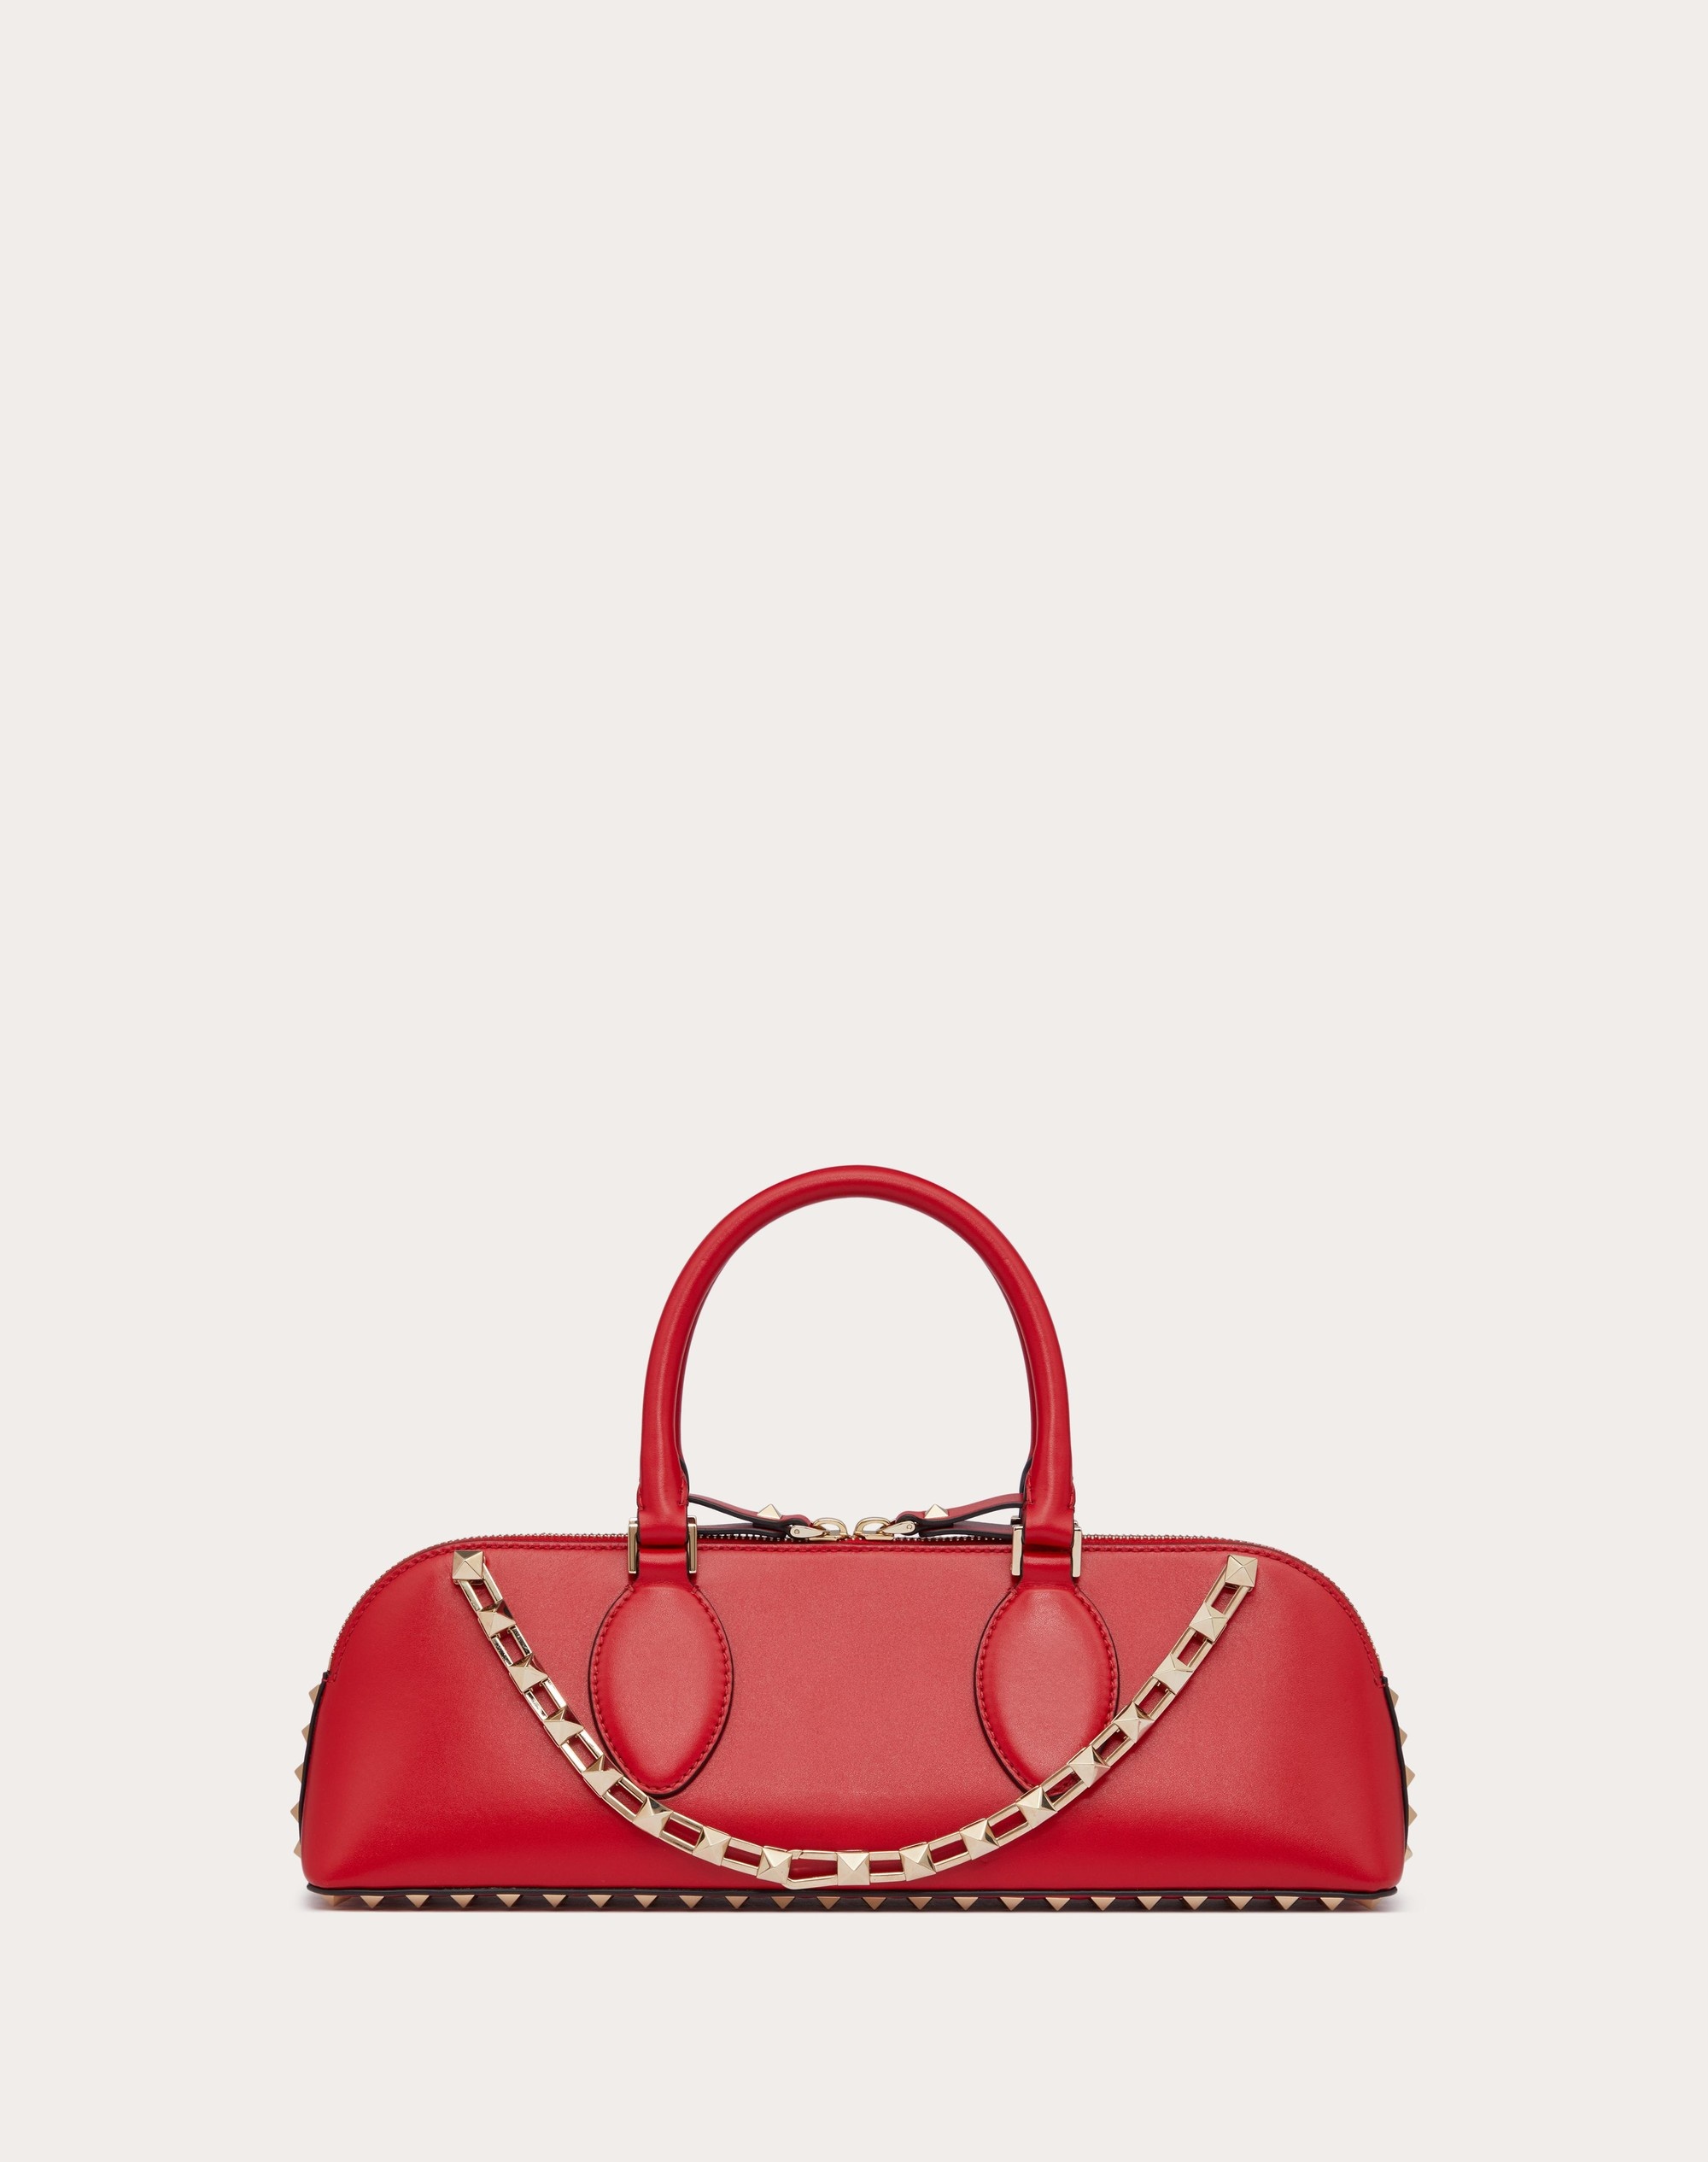 Exquisite Louis Vuitton Jasmine bag in Red Epi leather